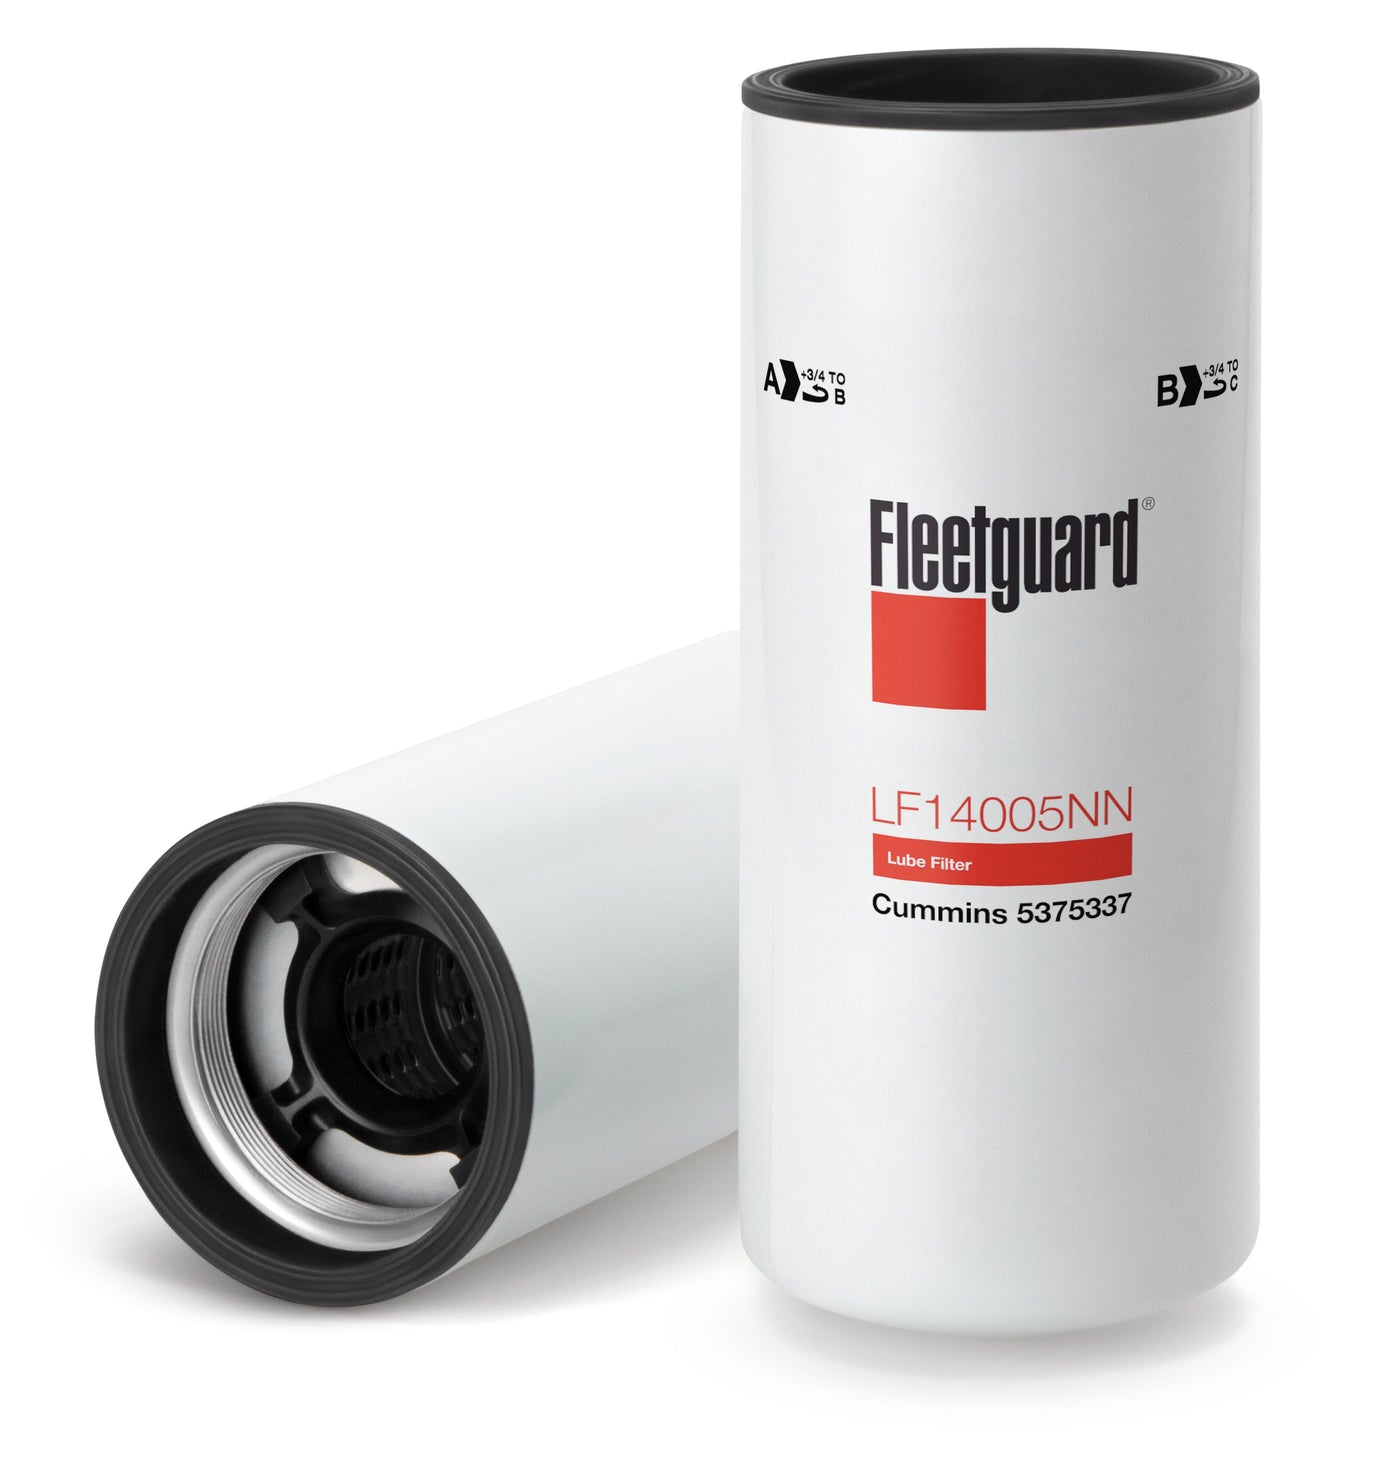 Fleetguard LF14005NN Nanonet Oil Filter 